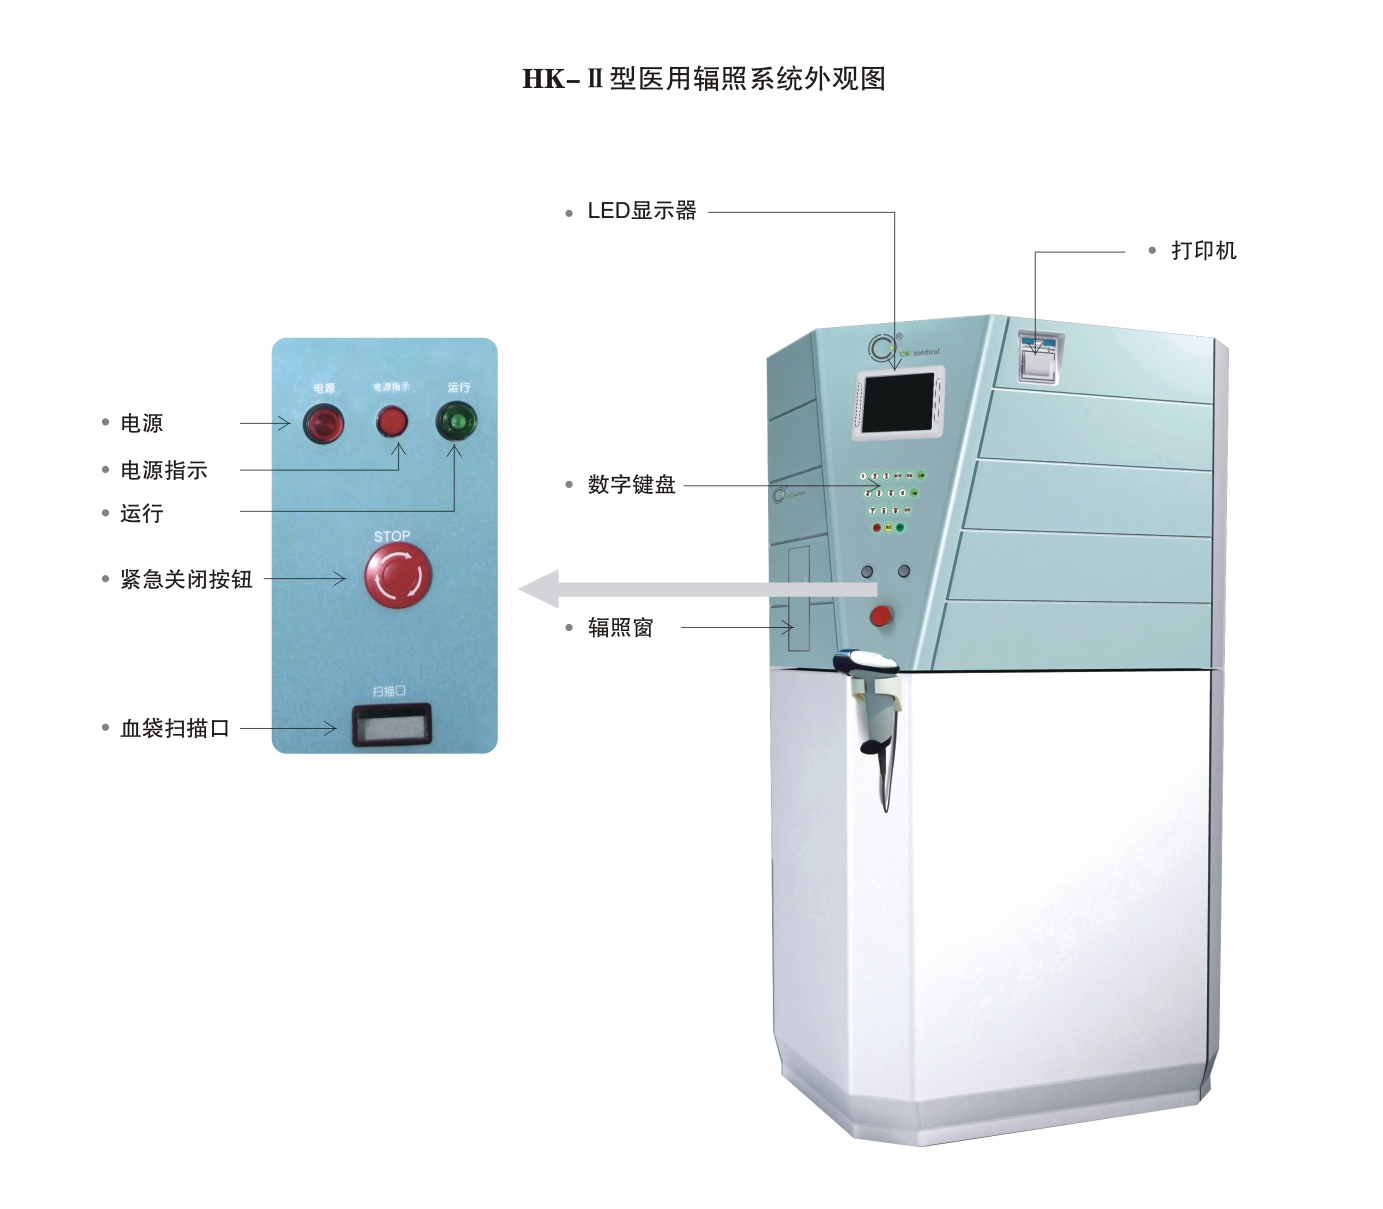 HK-II医用血液辐照系统